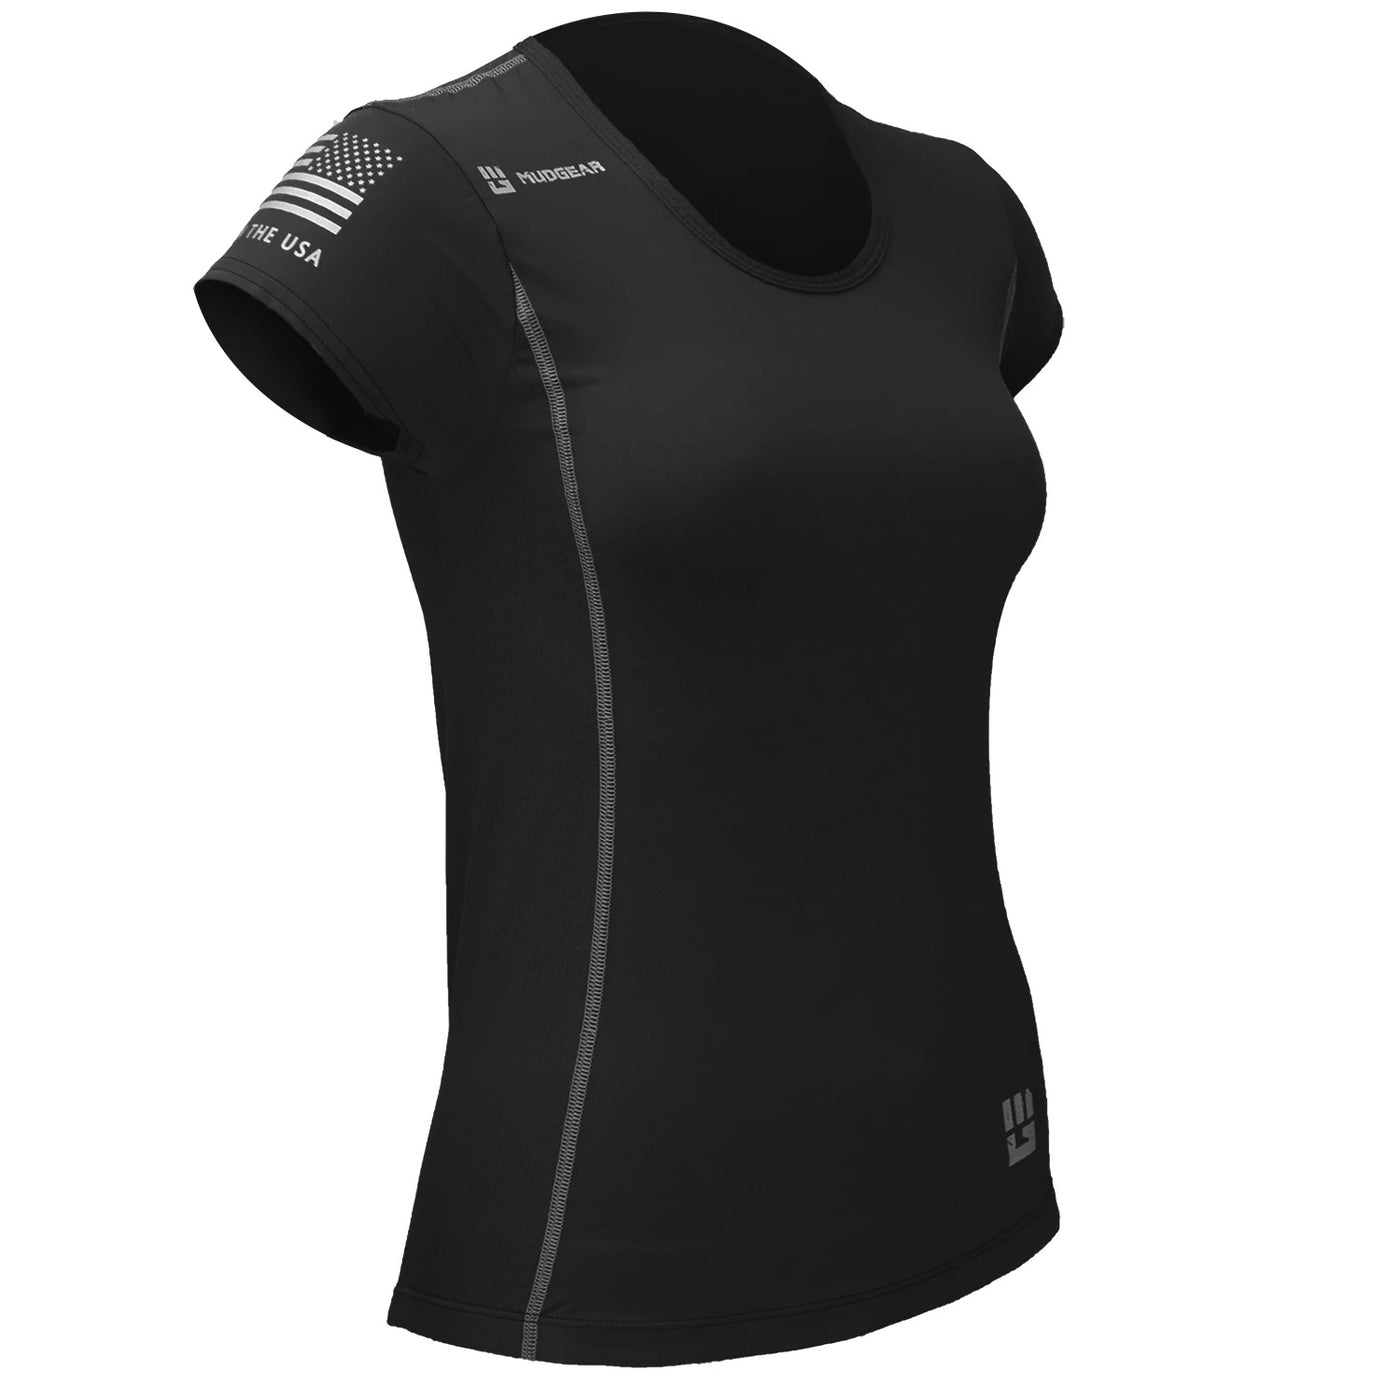 Mudgear Women’s Fitted Performance Shirt - Short Sleeve (Black) 